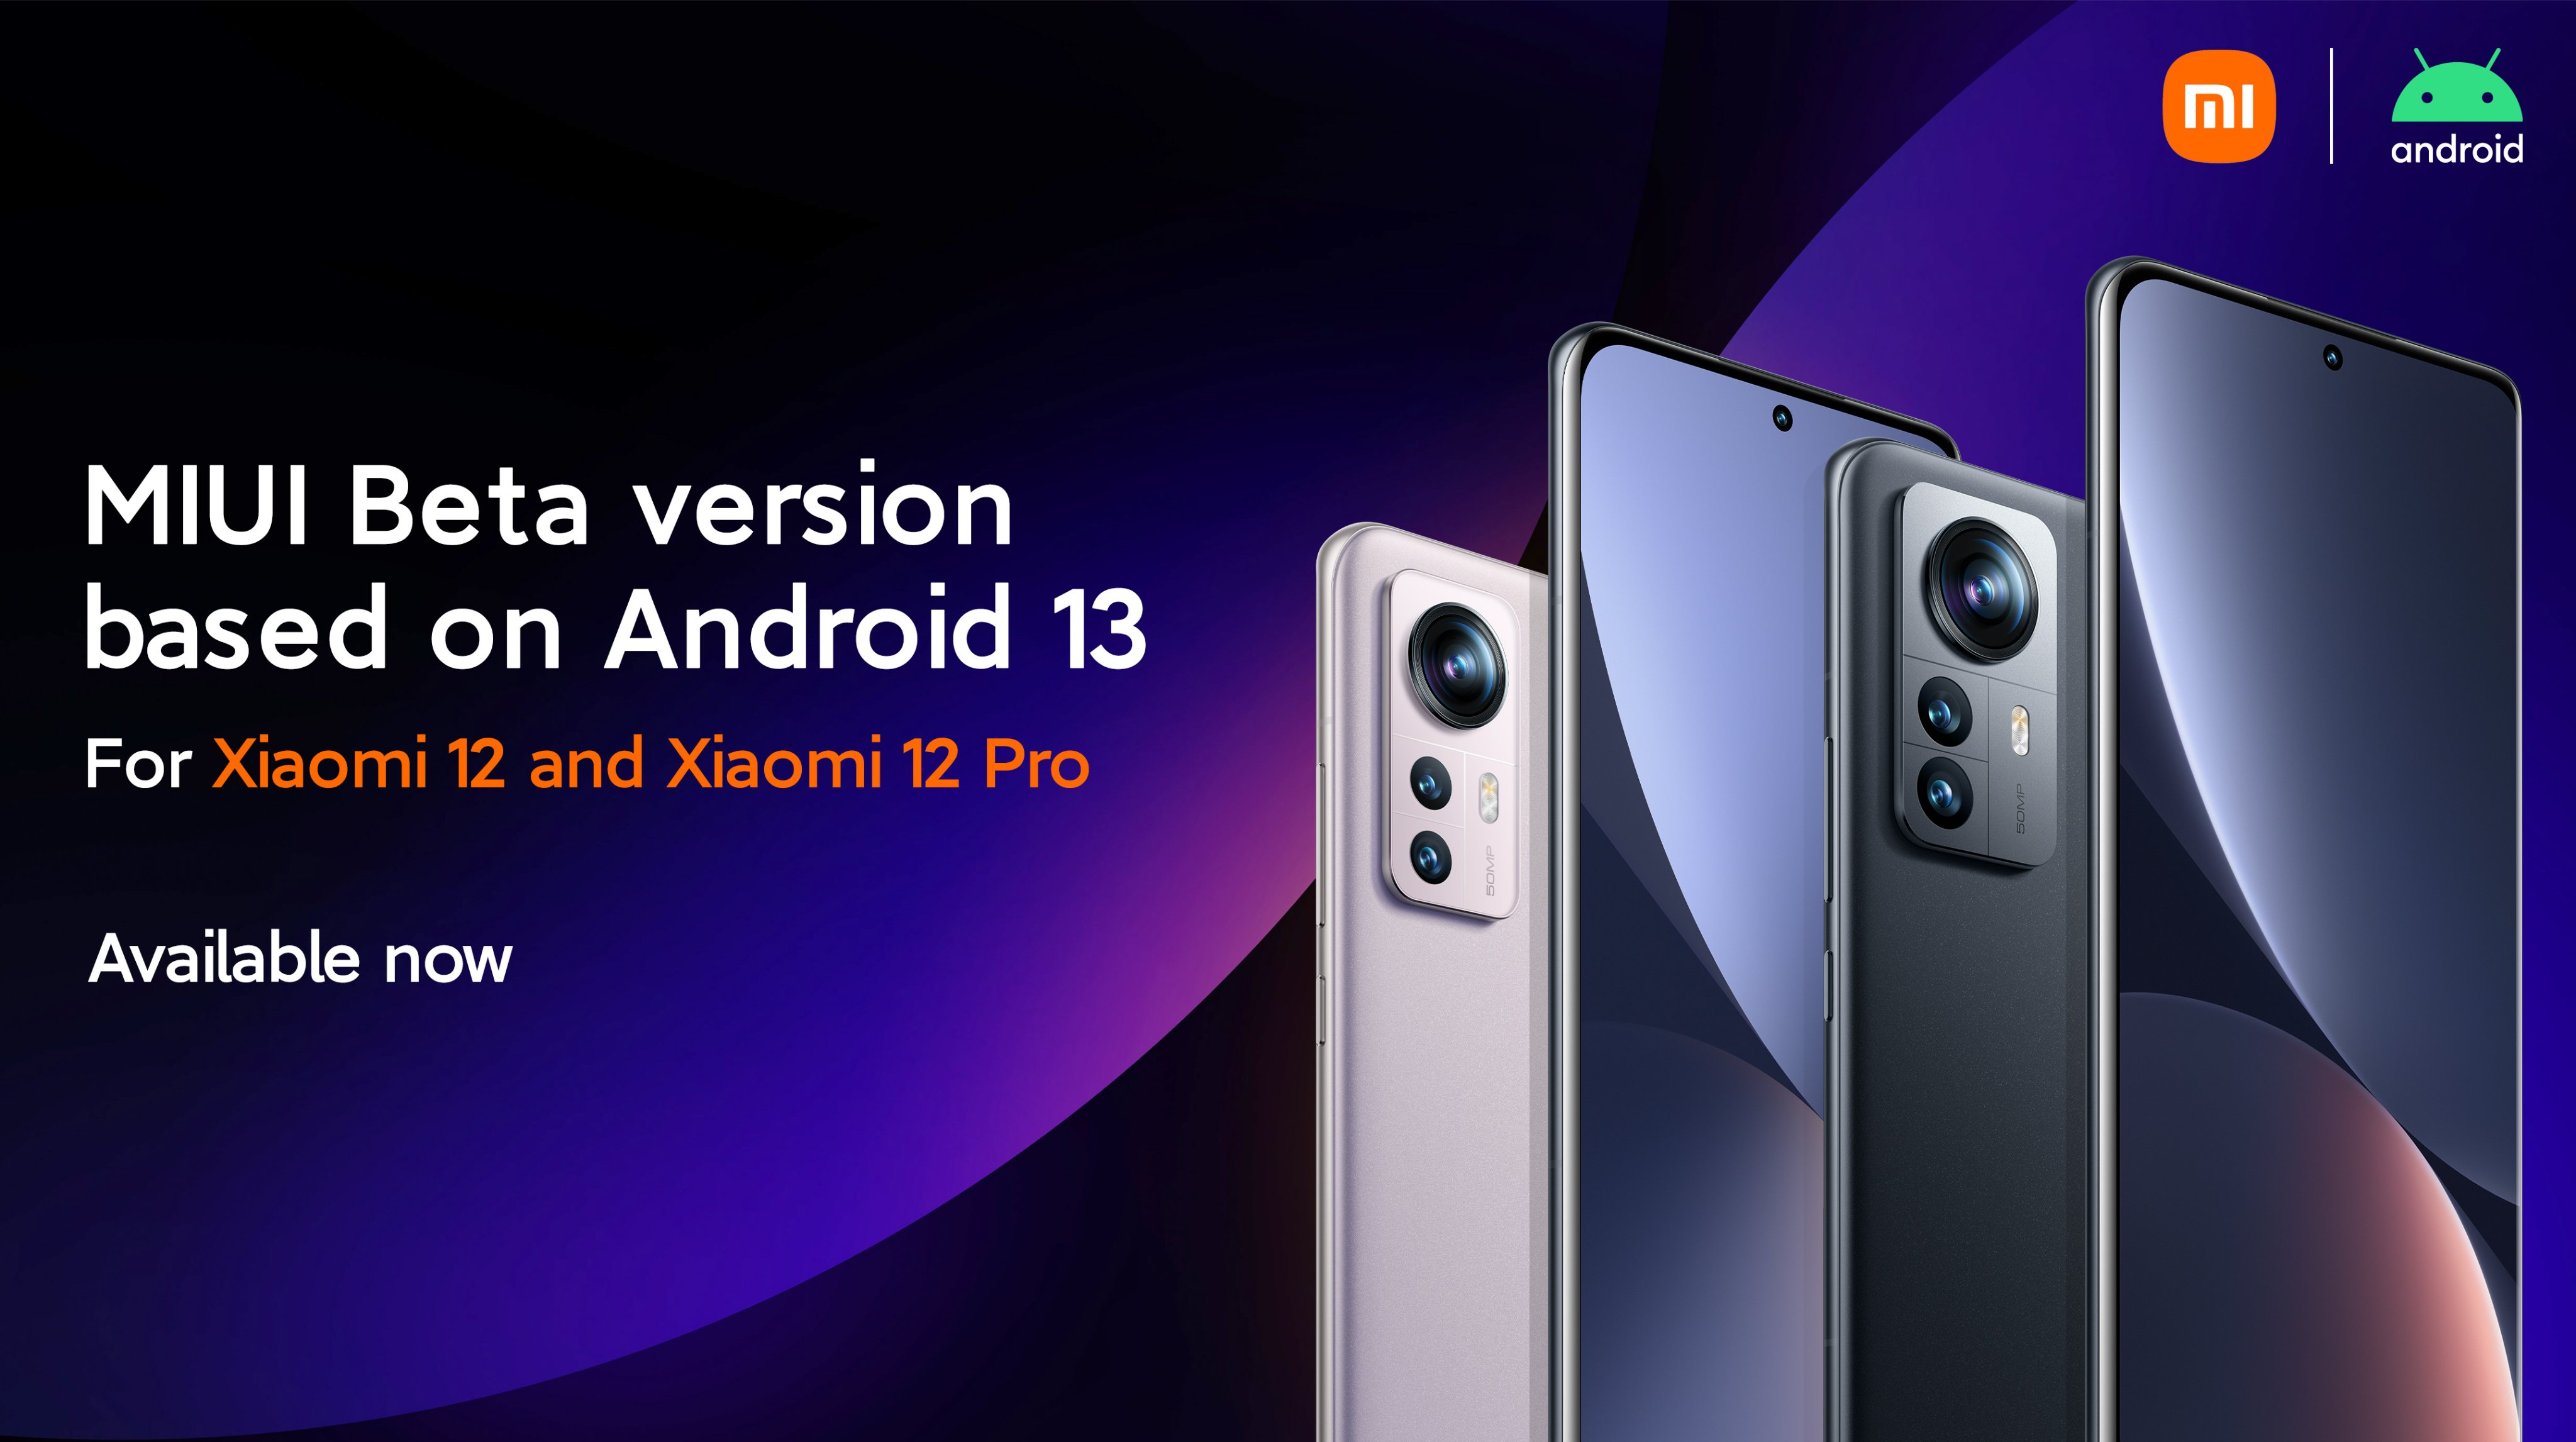 Xiaomi 12 та Xiaomi 12 Pro отримали бета-версію MIUI 13 на основі Android 13